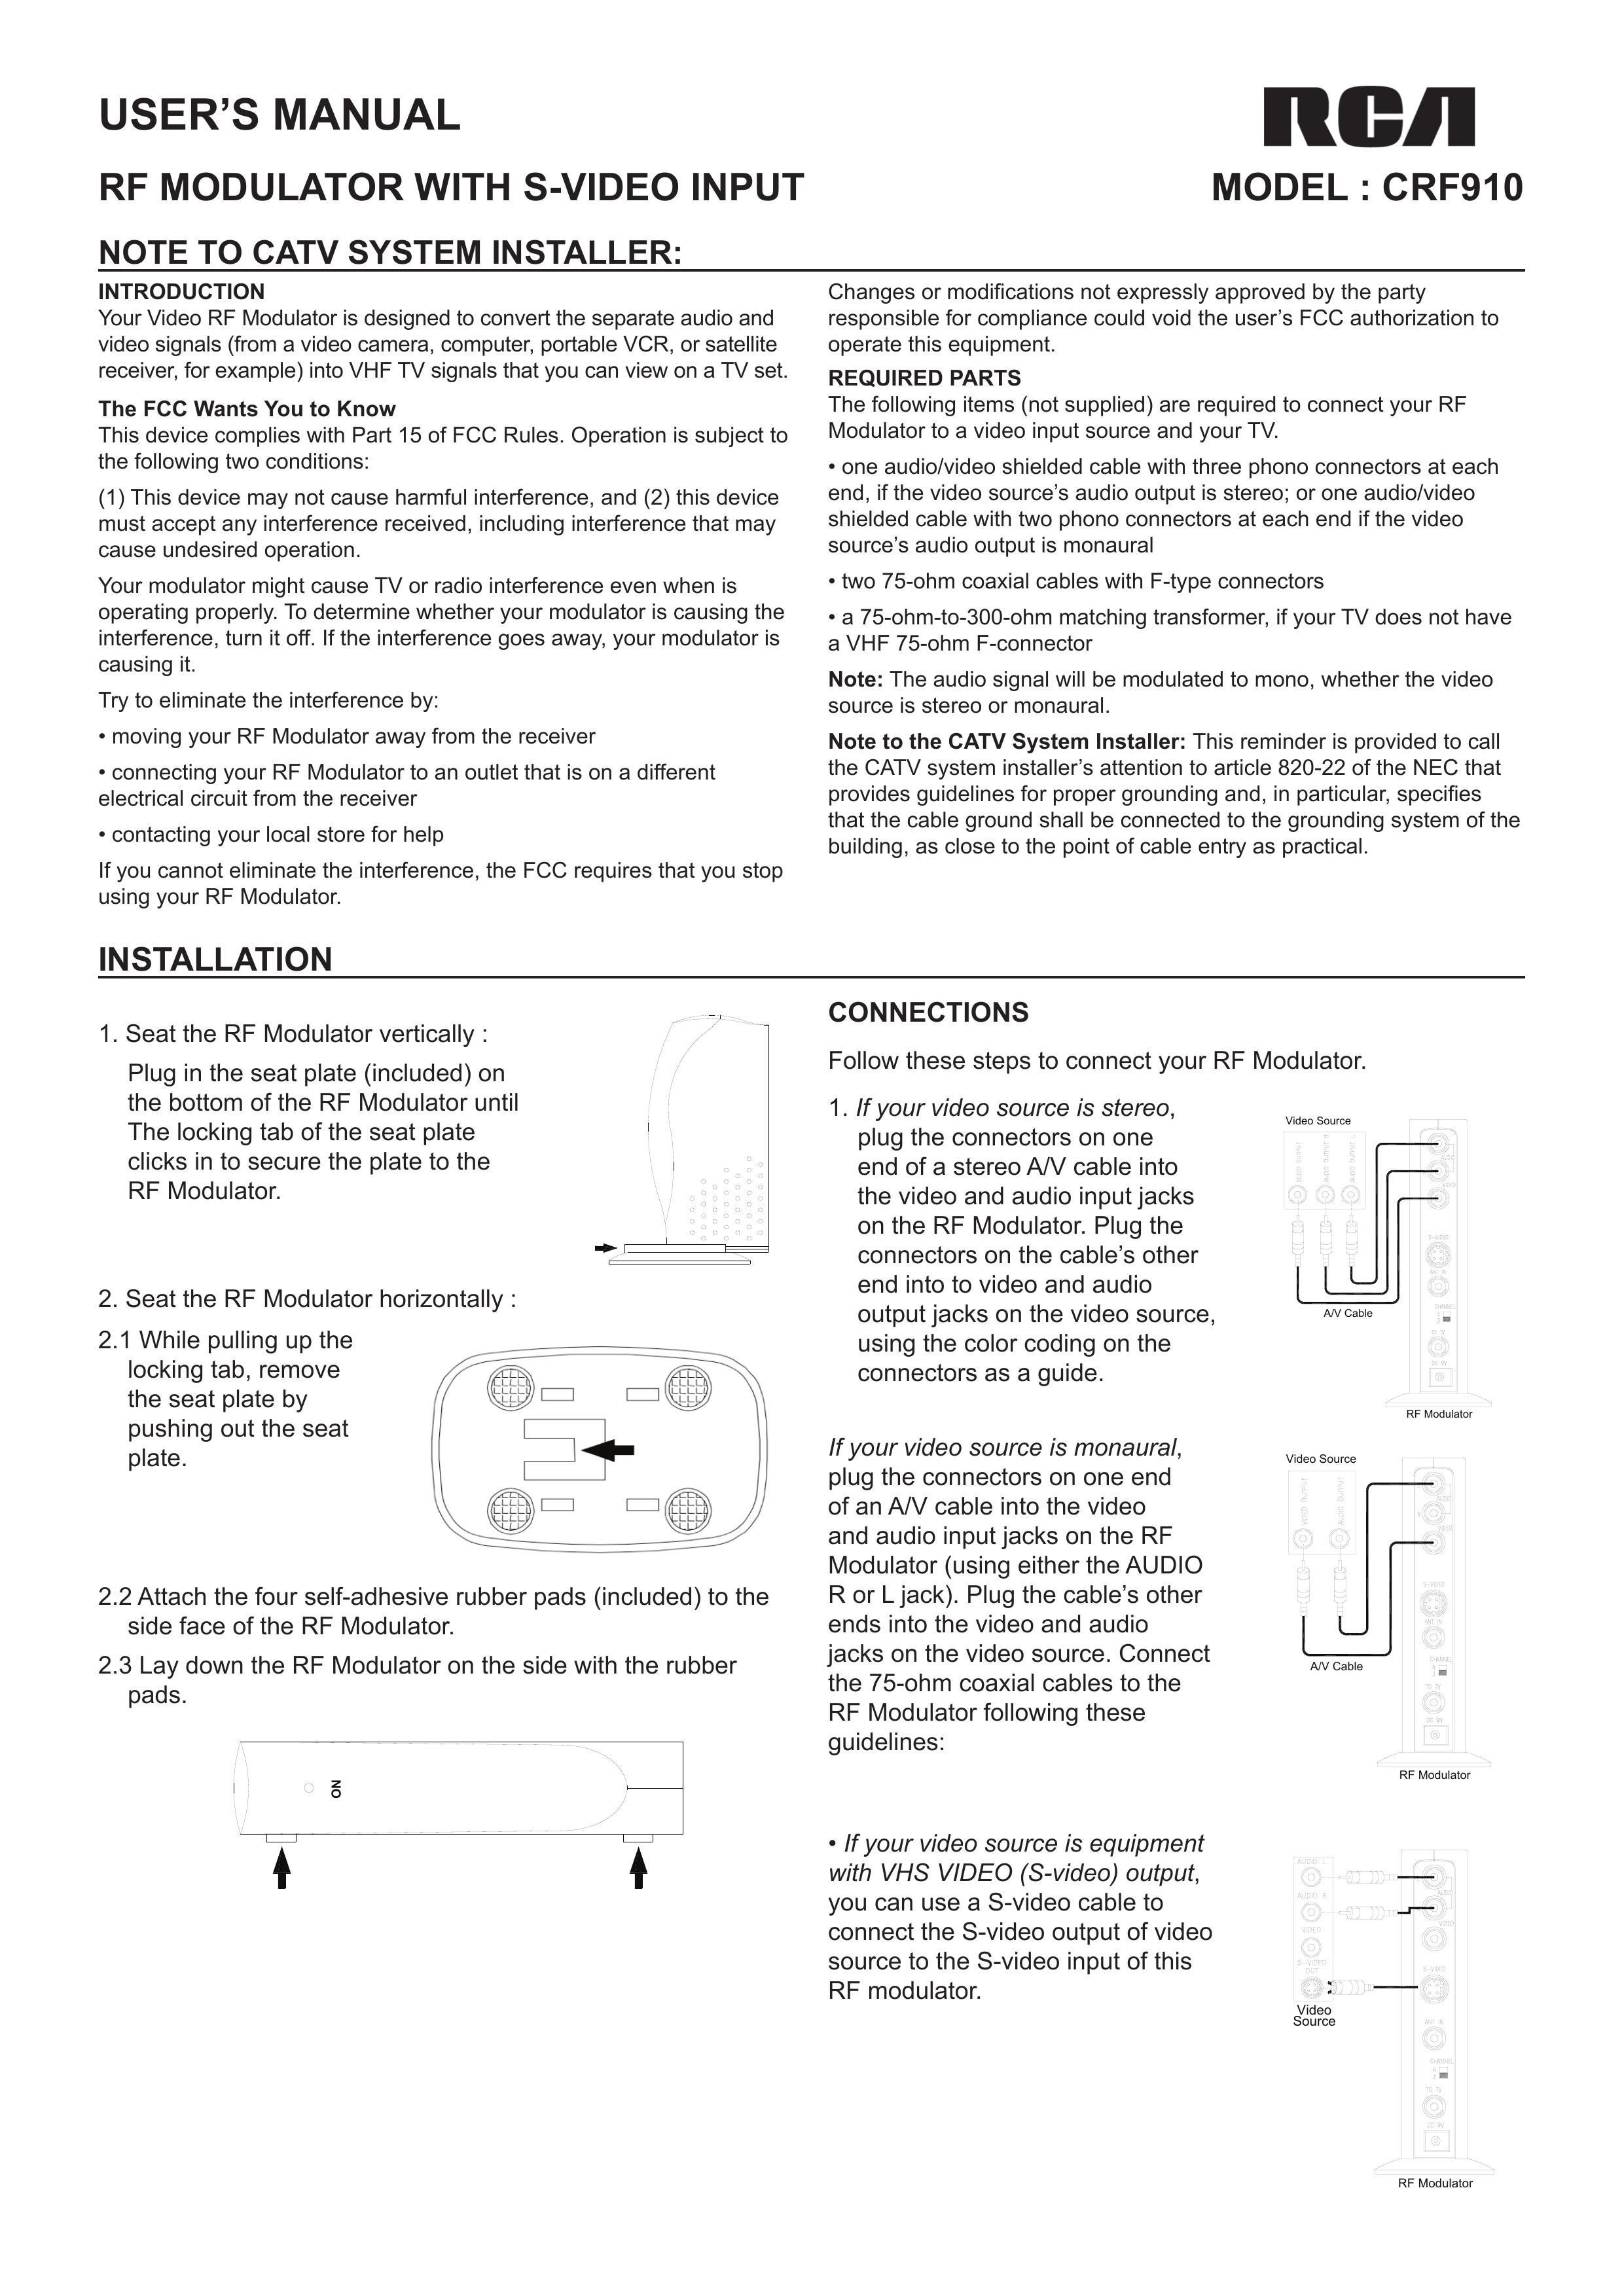 RCA CRF910 Refrigerator User Manual